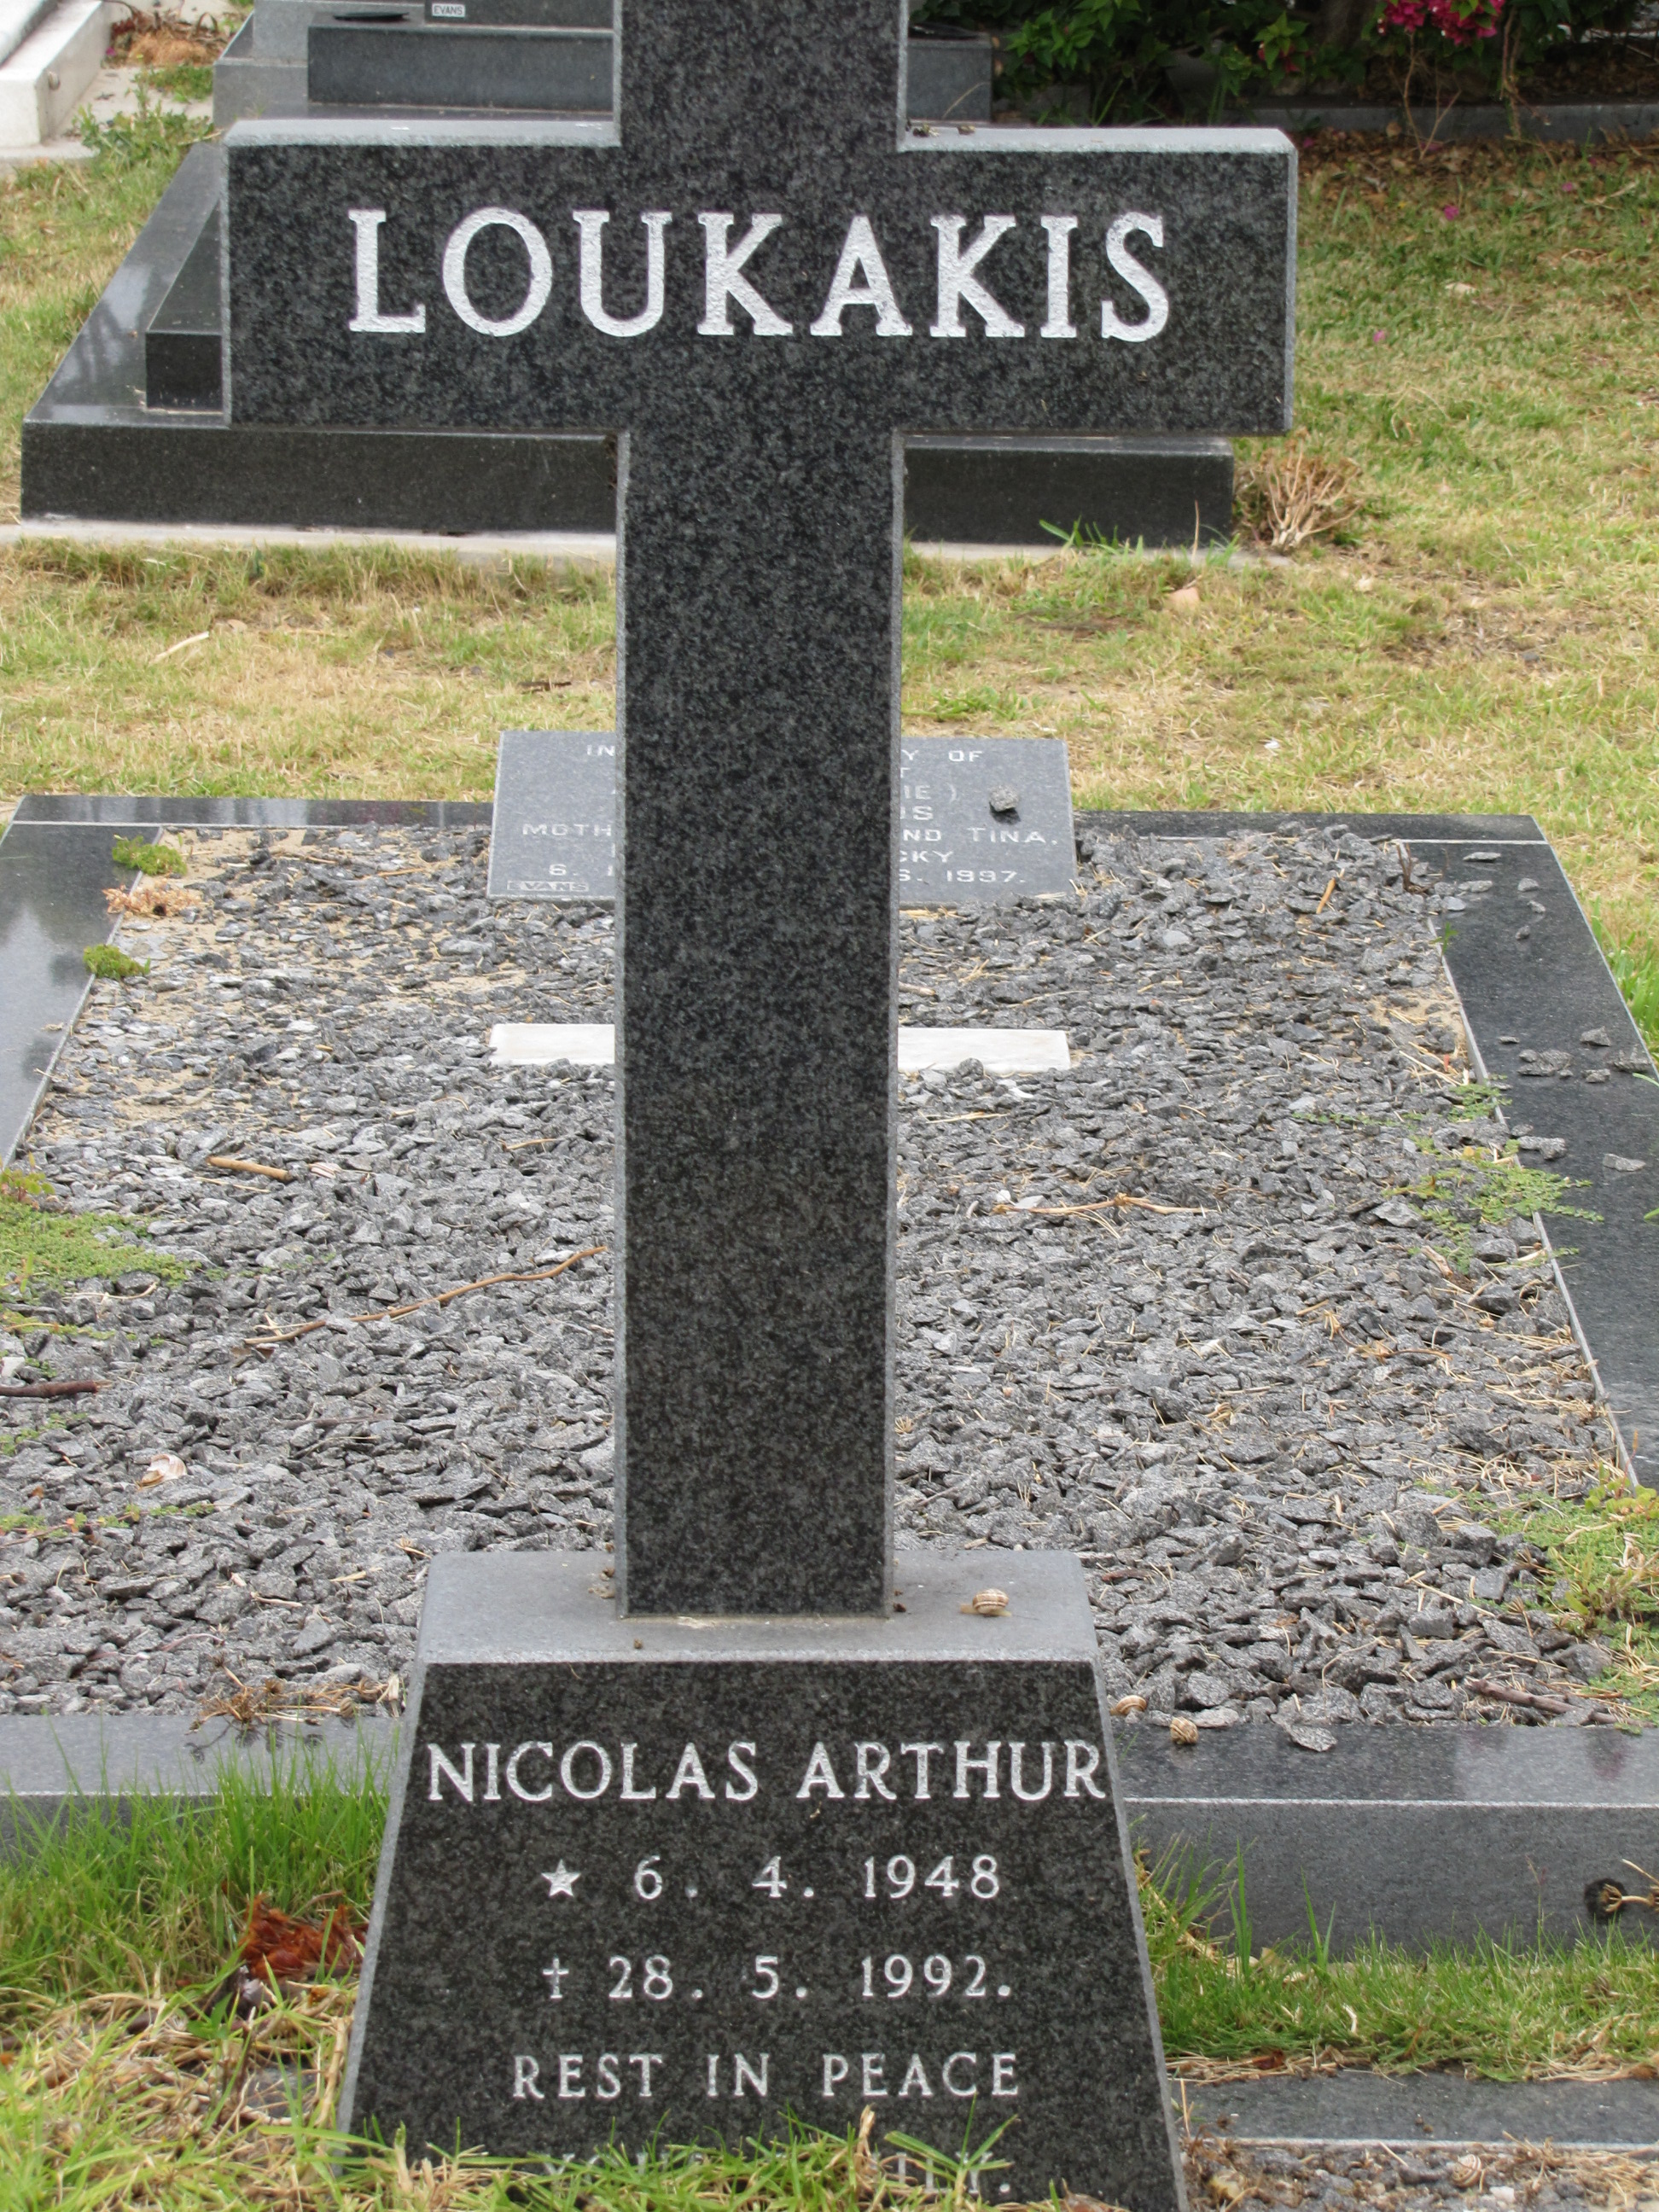 LOUKAKIS Nicolas Arthur 1948-1992